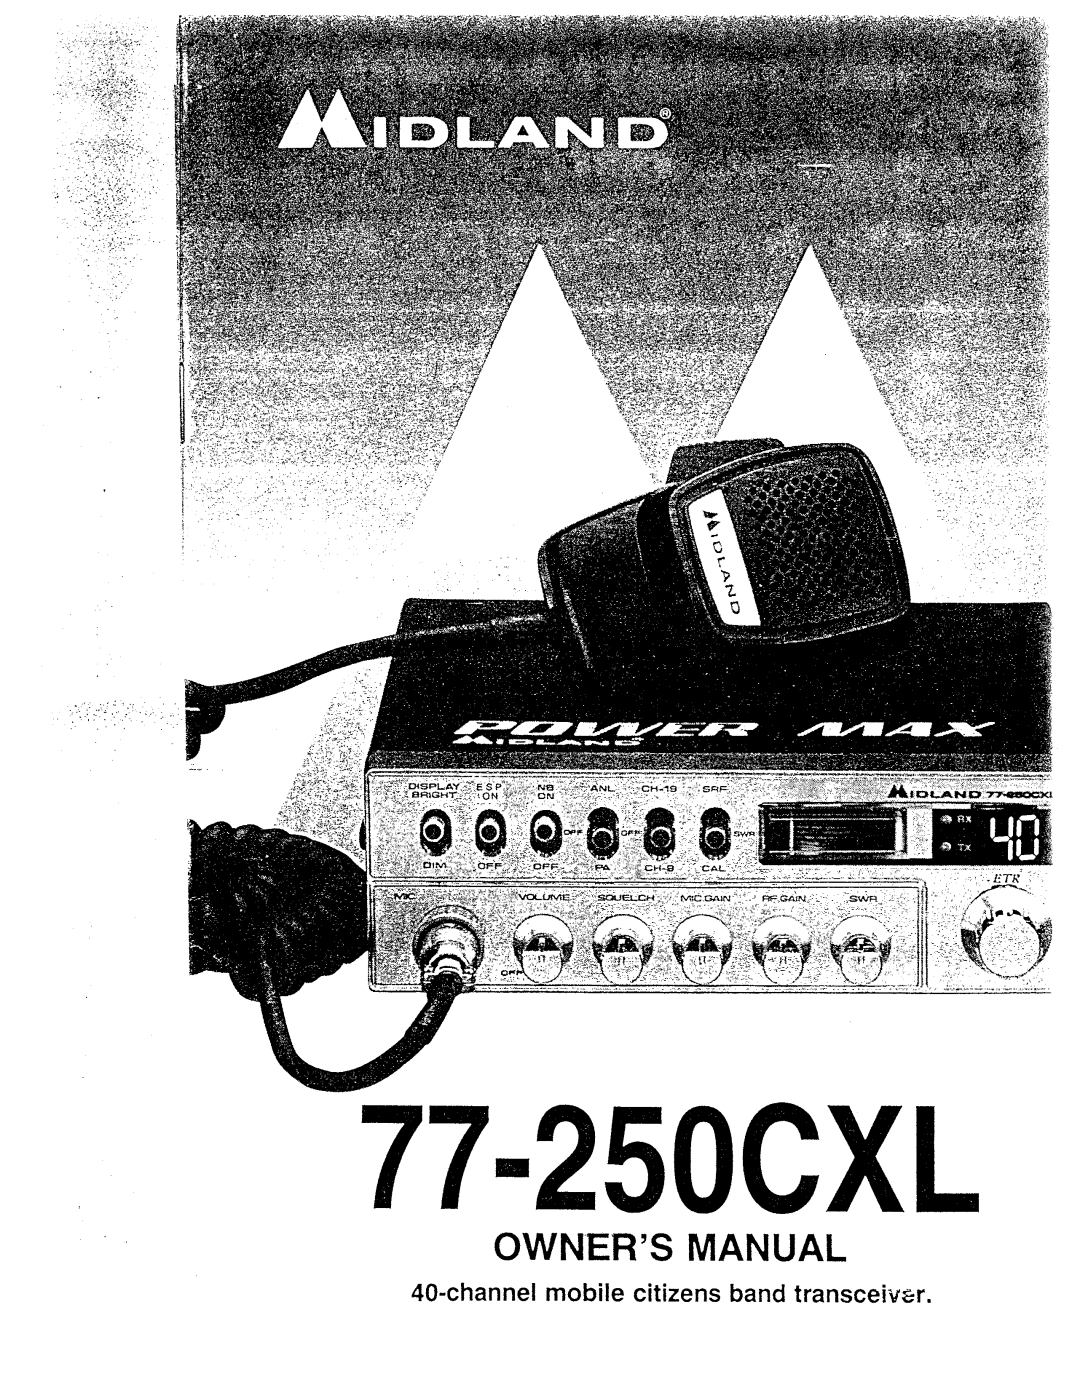 Midland Radio 77-250CXL manual 